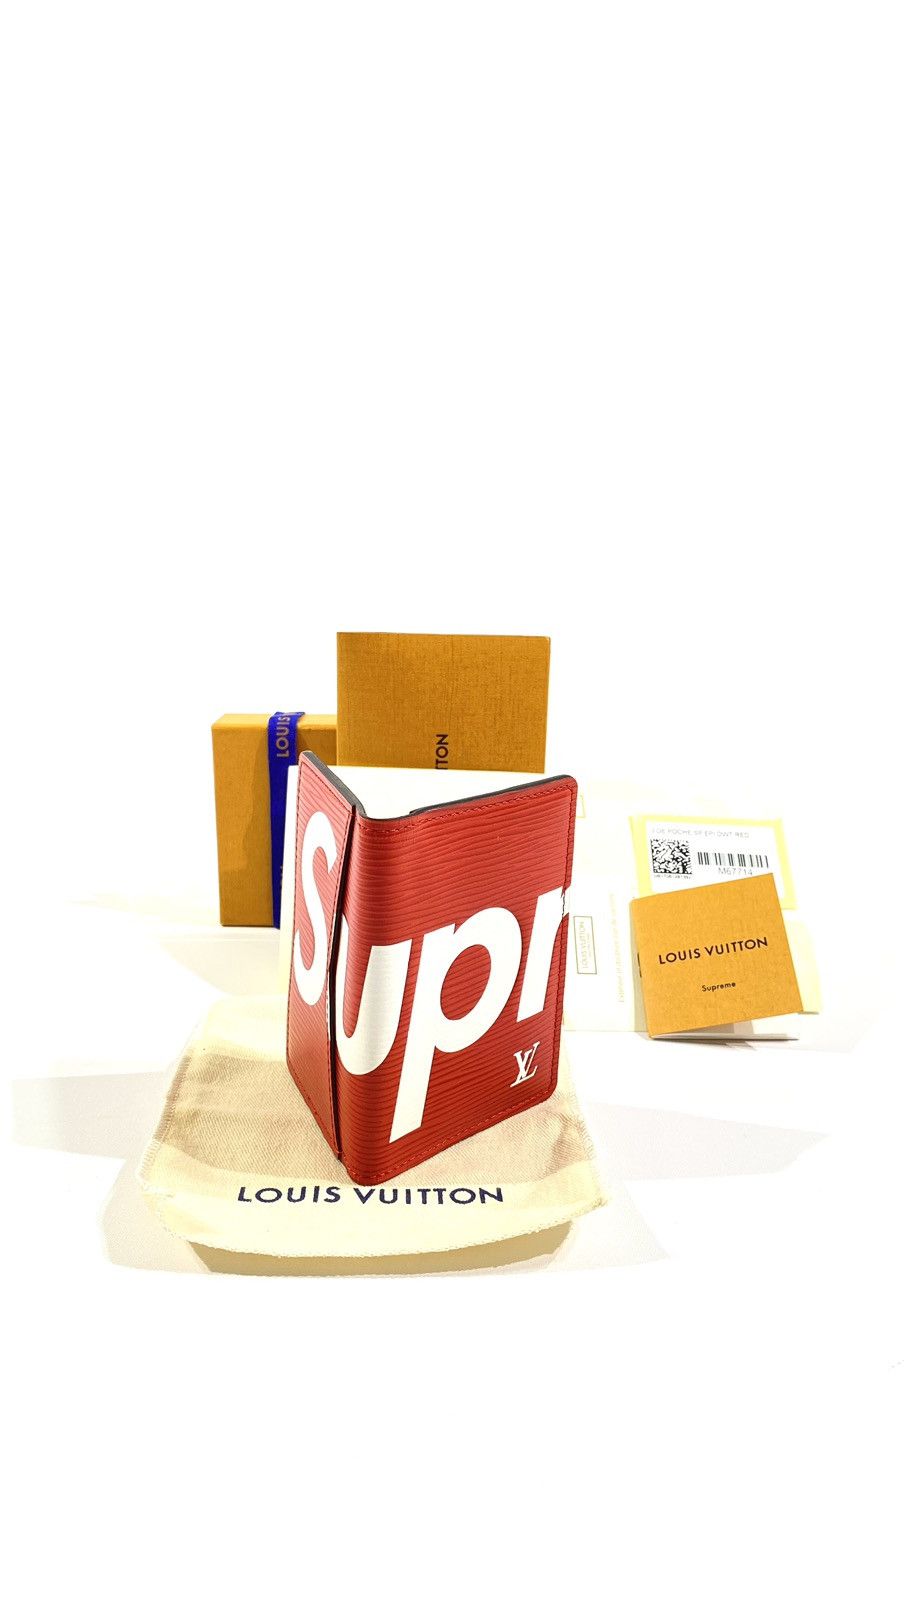 Louis Vuitton x Supreme x Supreme Epi Pocket Organizer Leather Bifold Wallet  - Red Wallets, Accessories - LOUSU20953